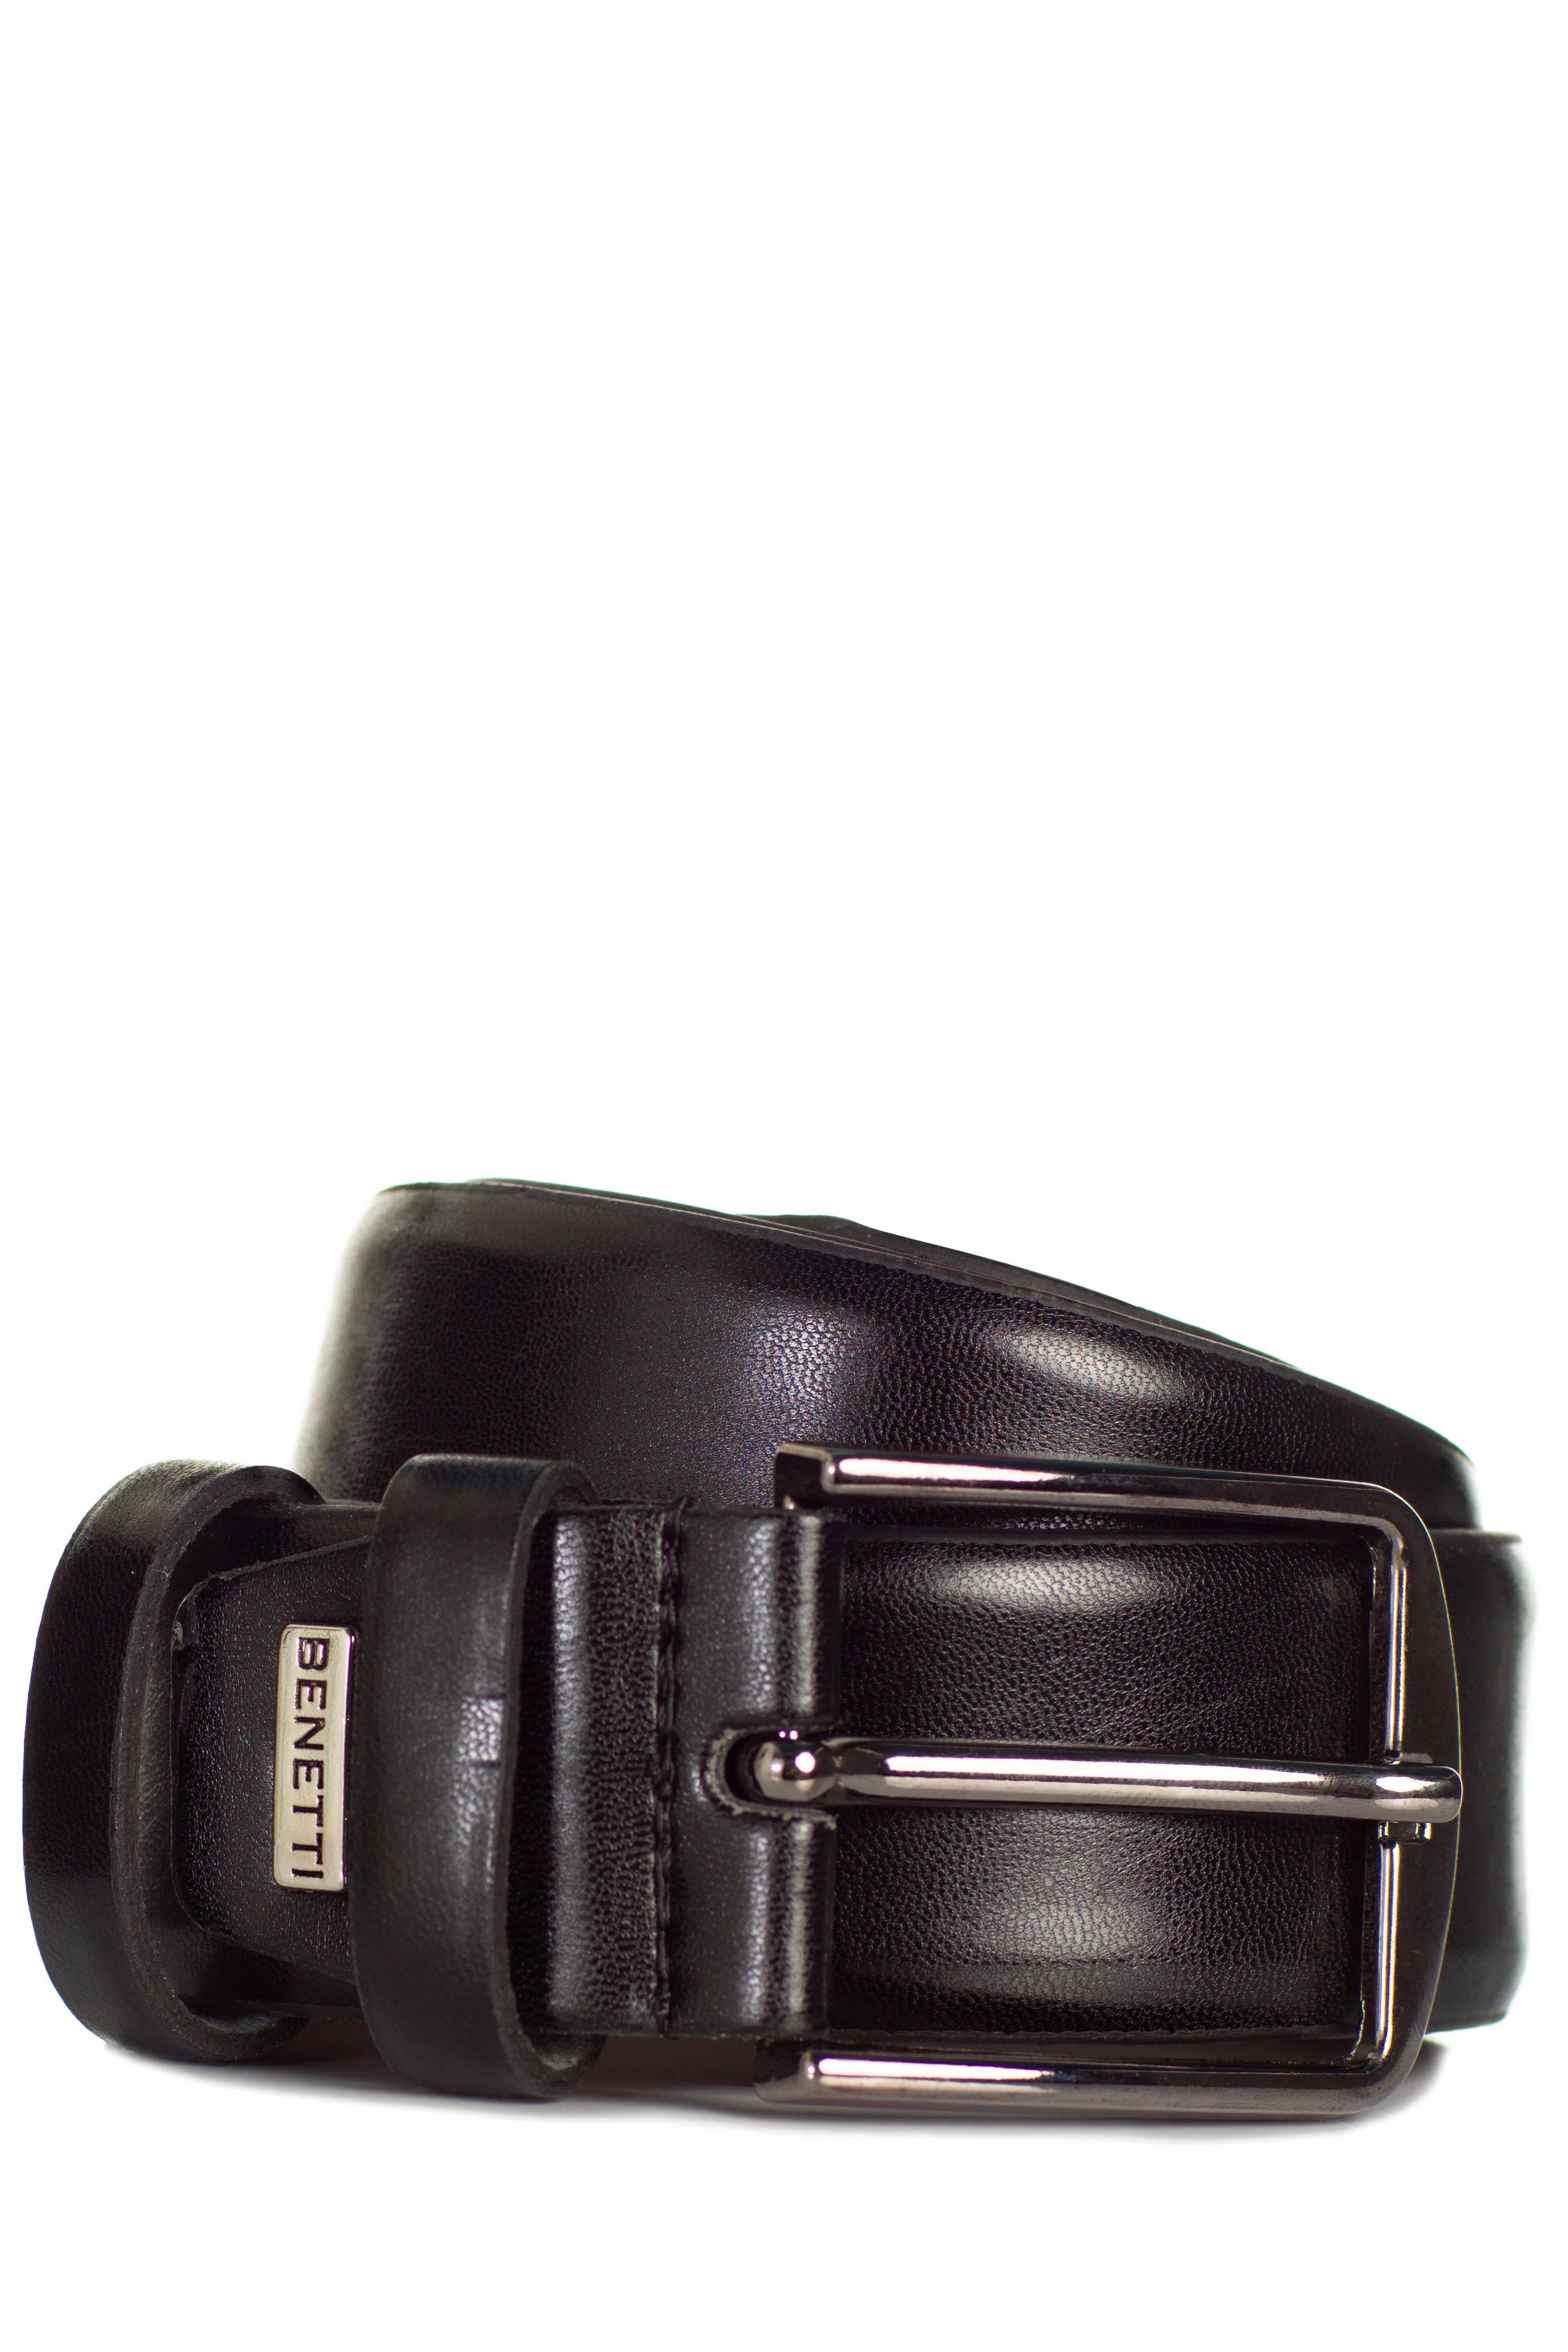 Men's Black Leather Belt by Benetti - Spirit Clothing